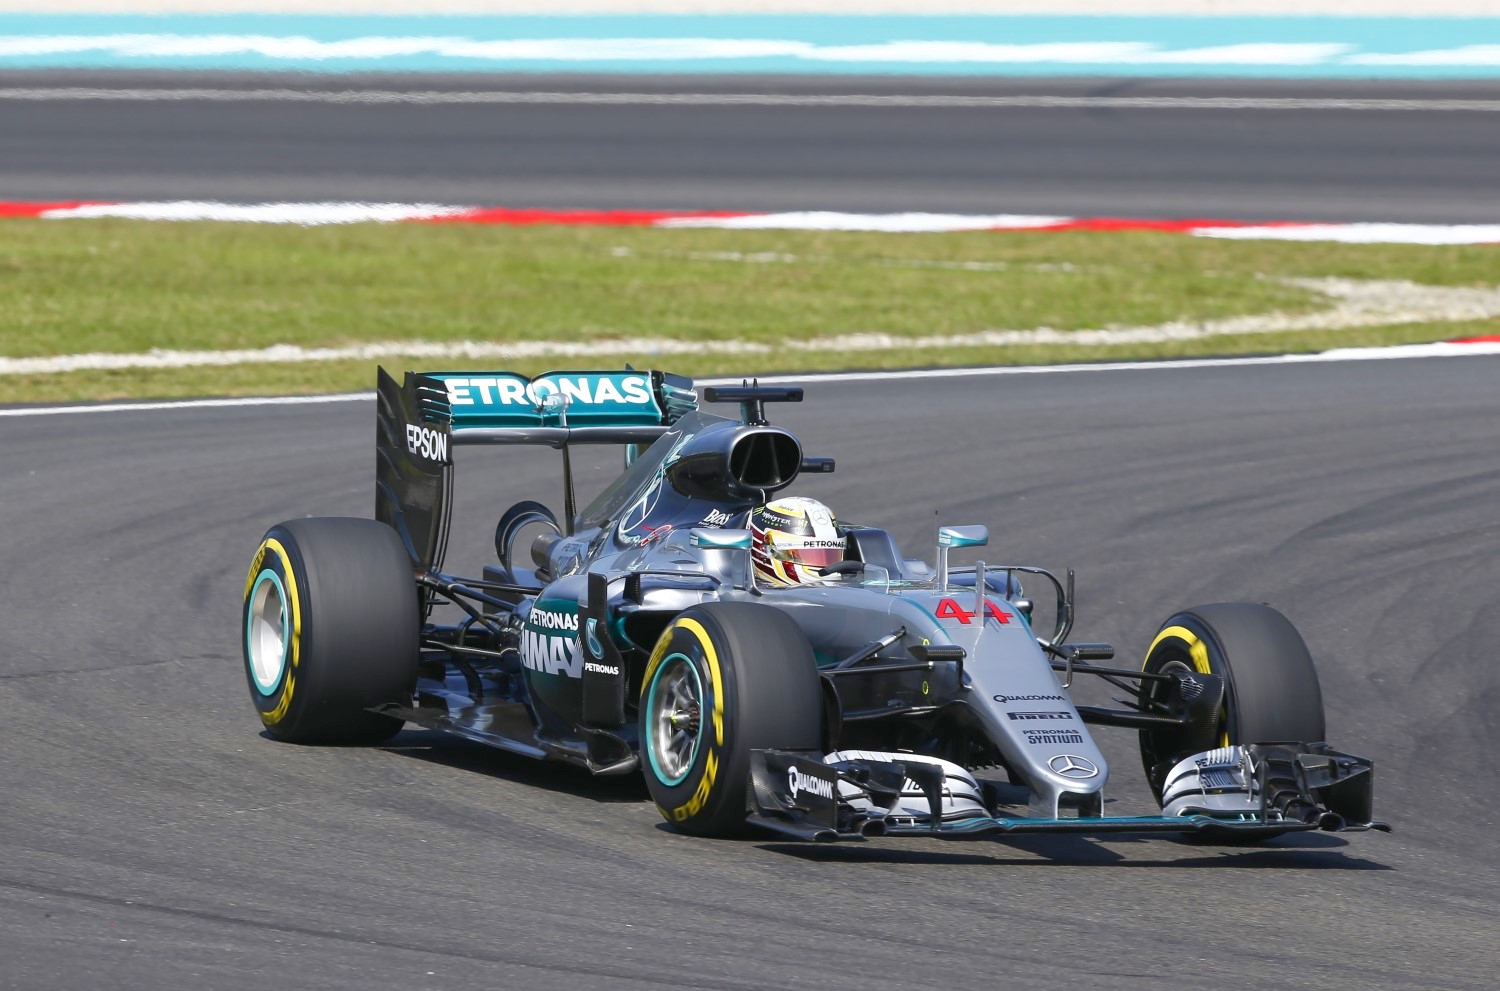 Ecclestone thinks Hamilton will win all the races in the superior Aldo Costa designed Mercedes in 2017 unless Mercedes puts a good driver in Rosberg's seat